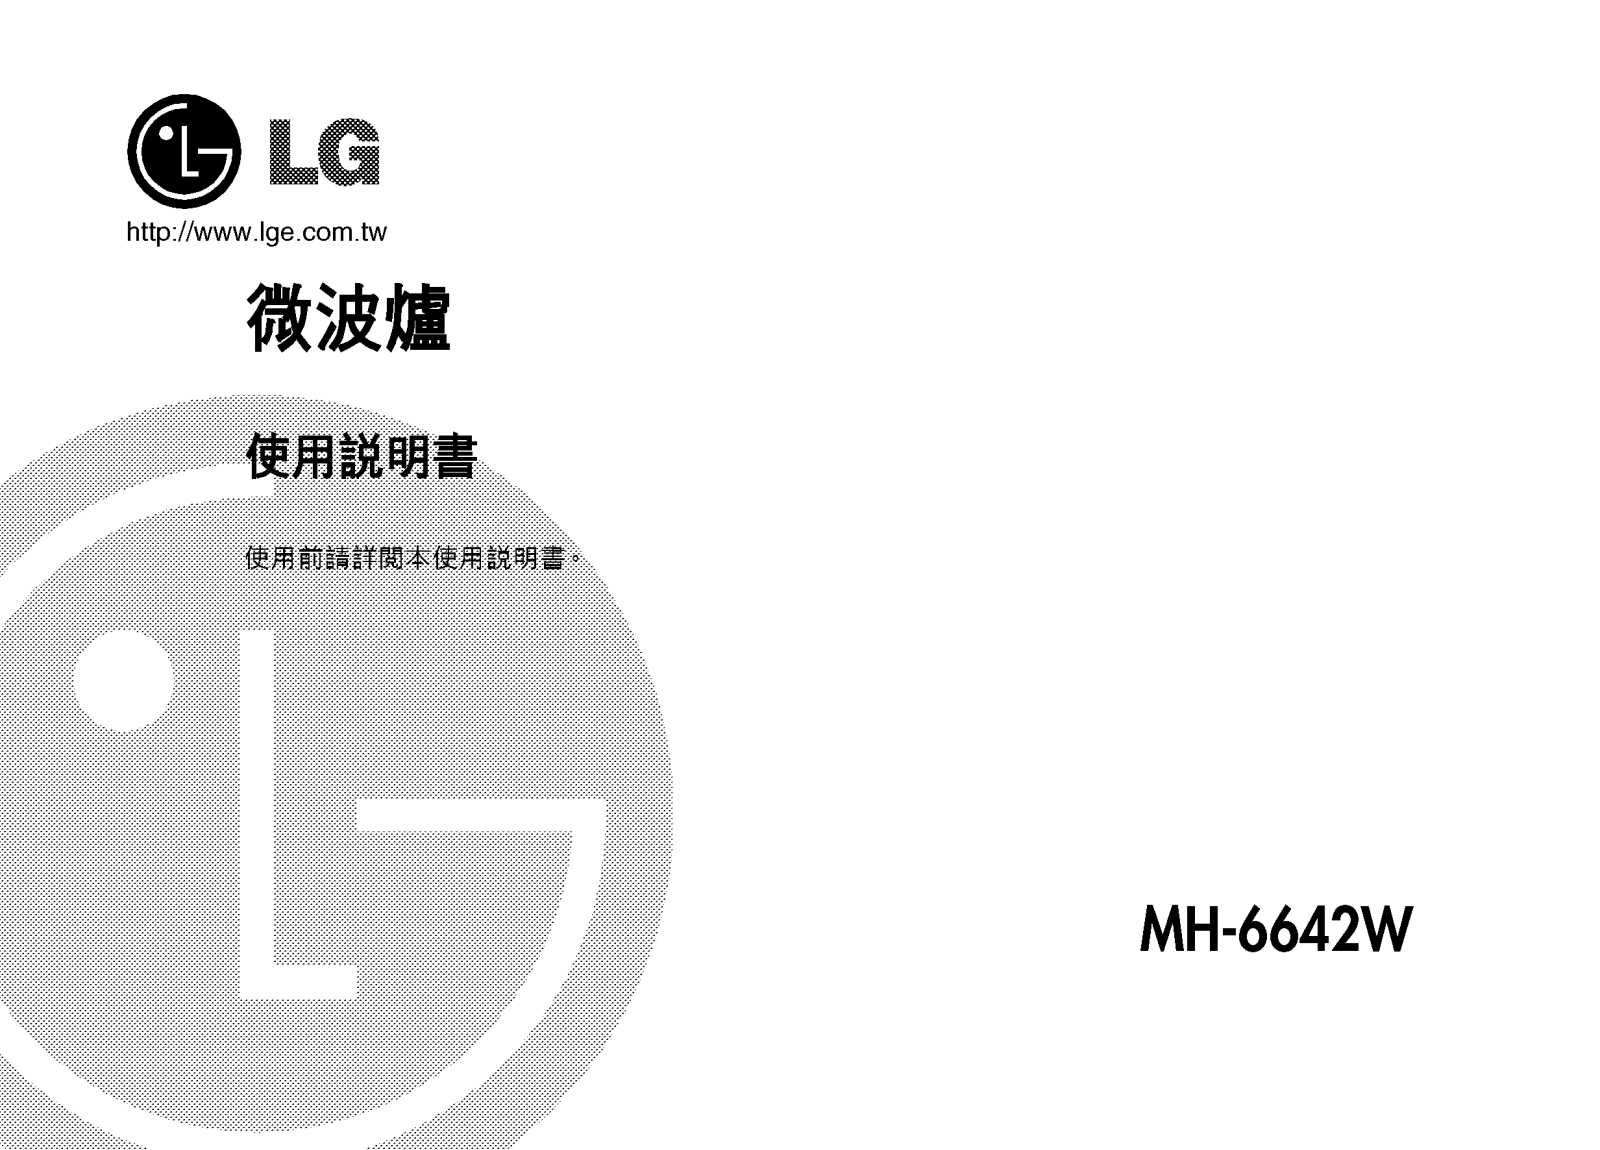 Lg MH-6642W User Manual